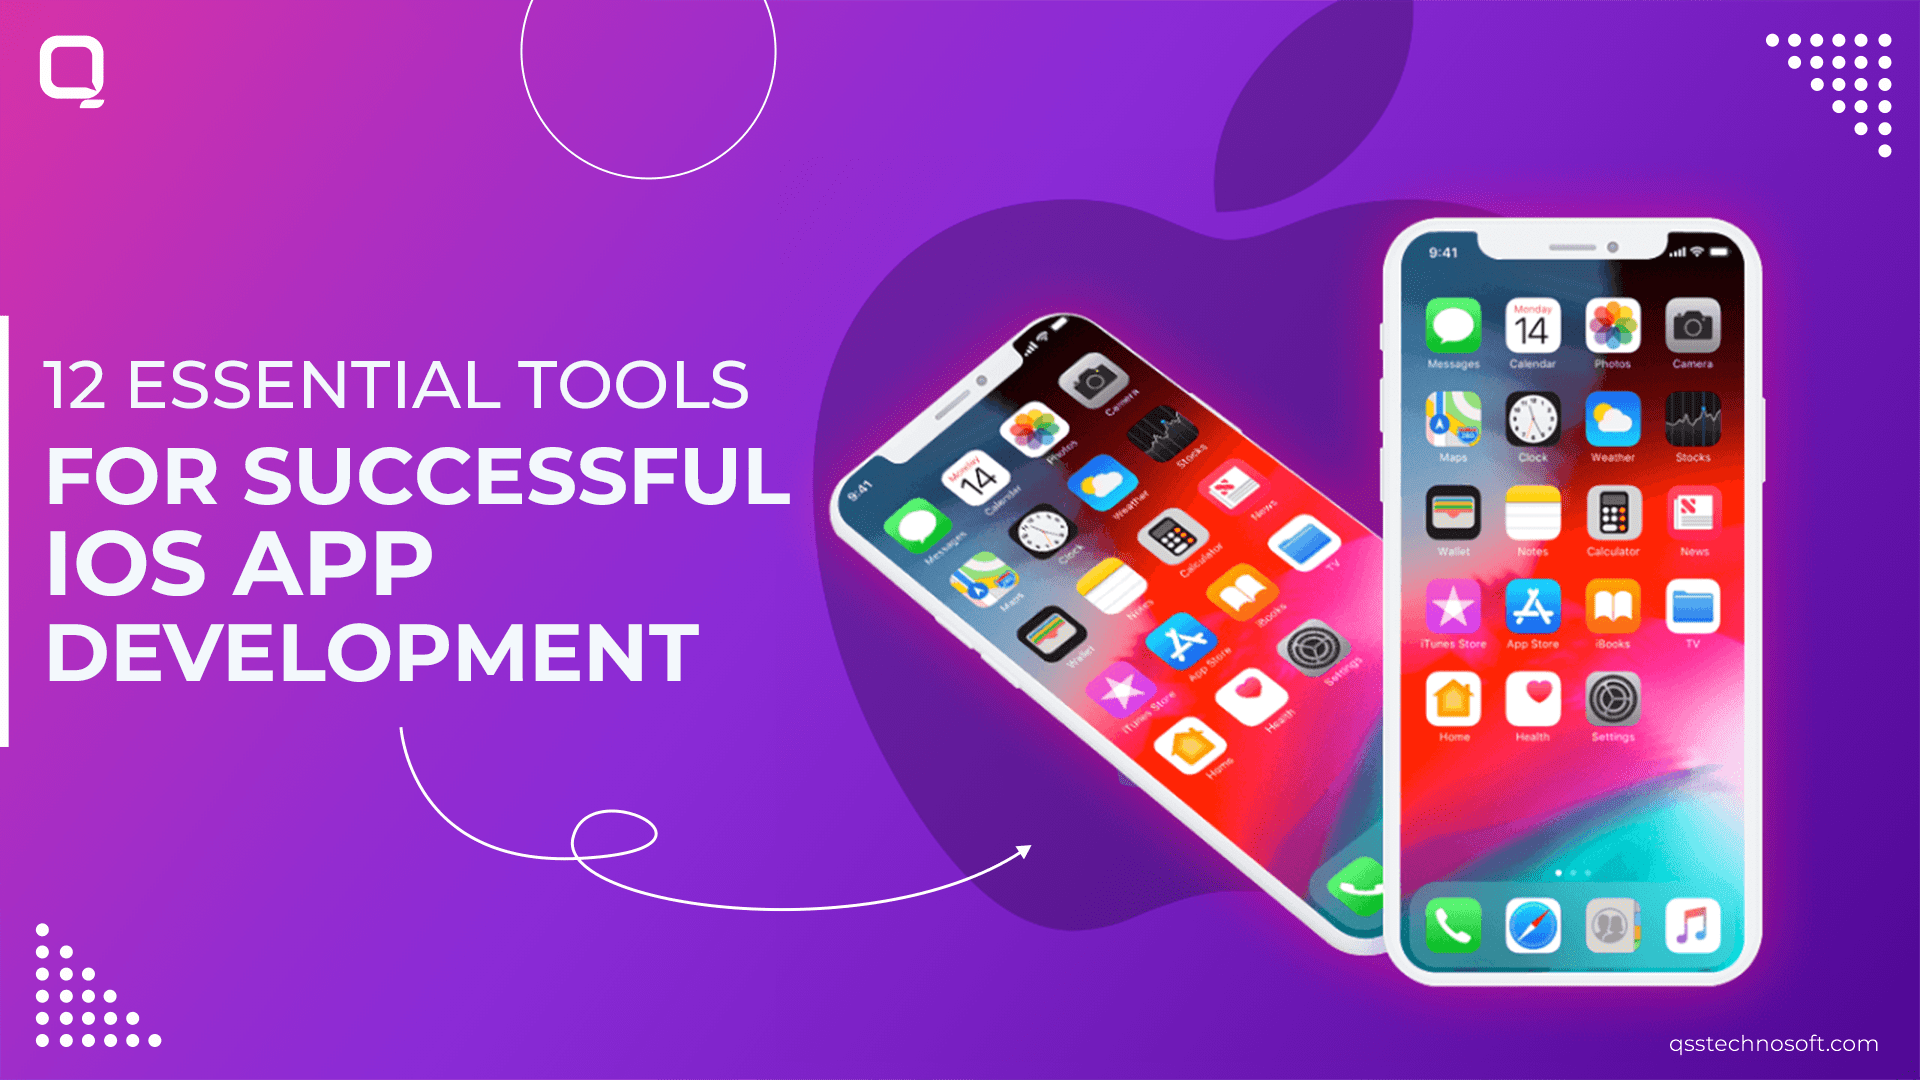 ios app development tools